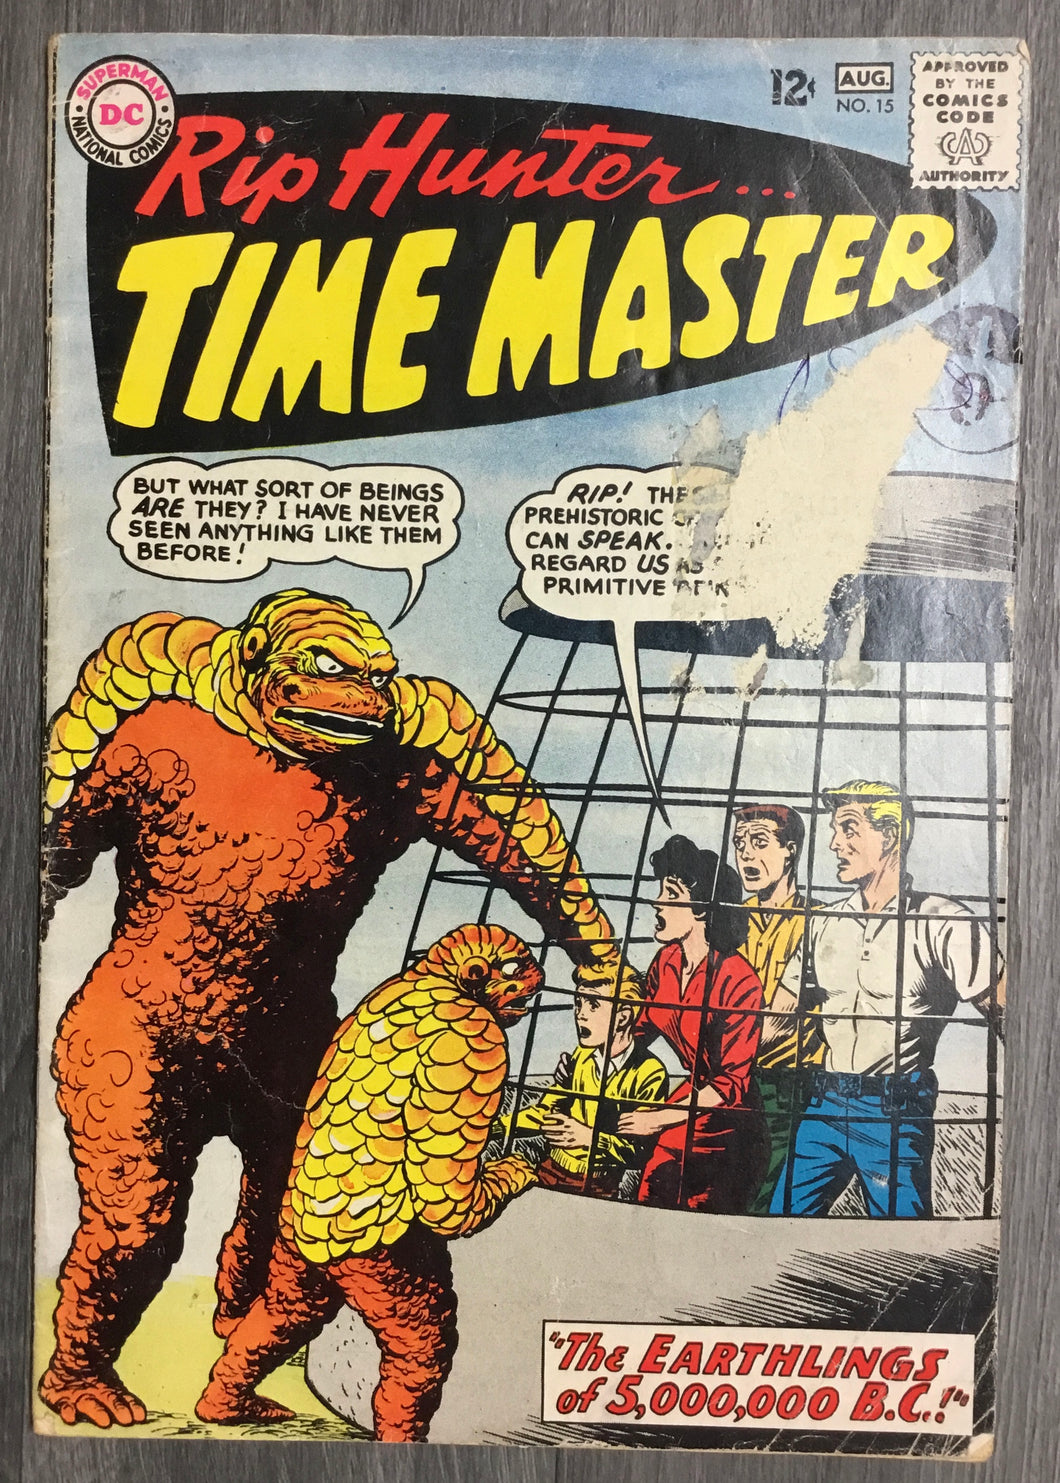 Rip Hunter… Time Master No. #15 1963 DC Comics